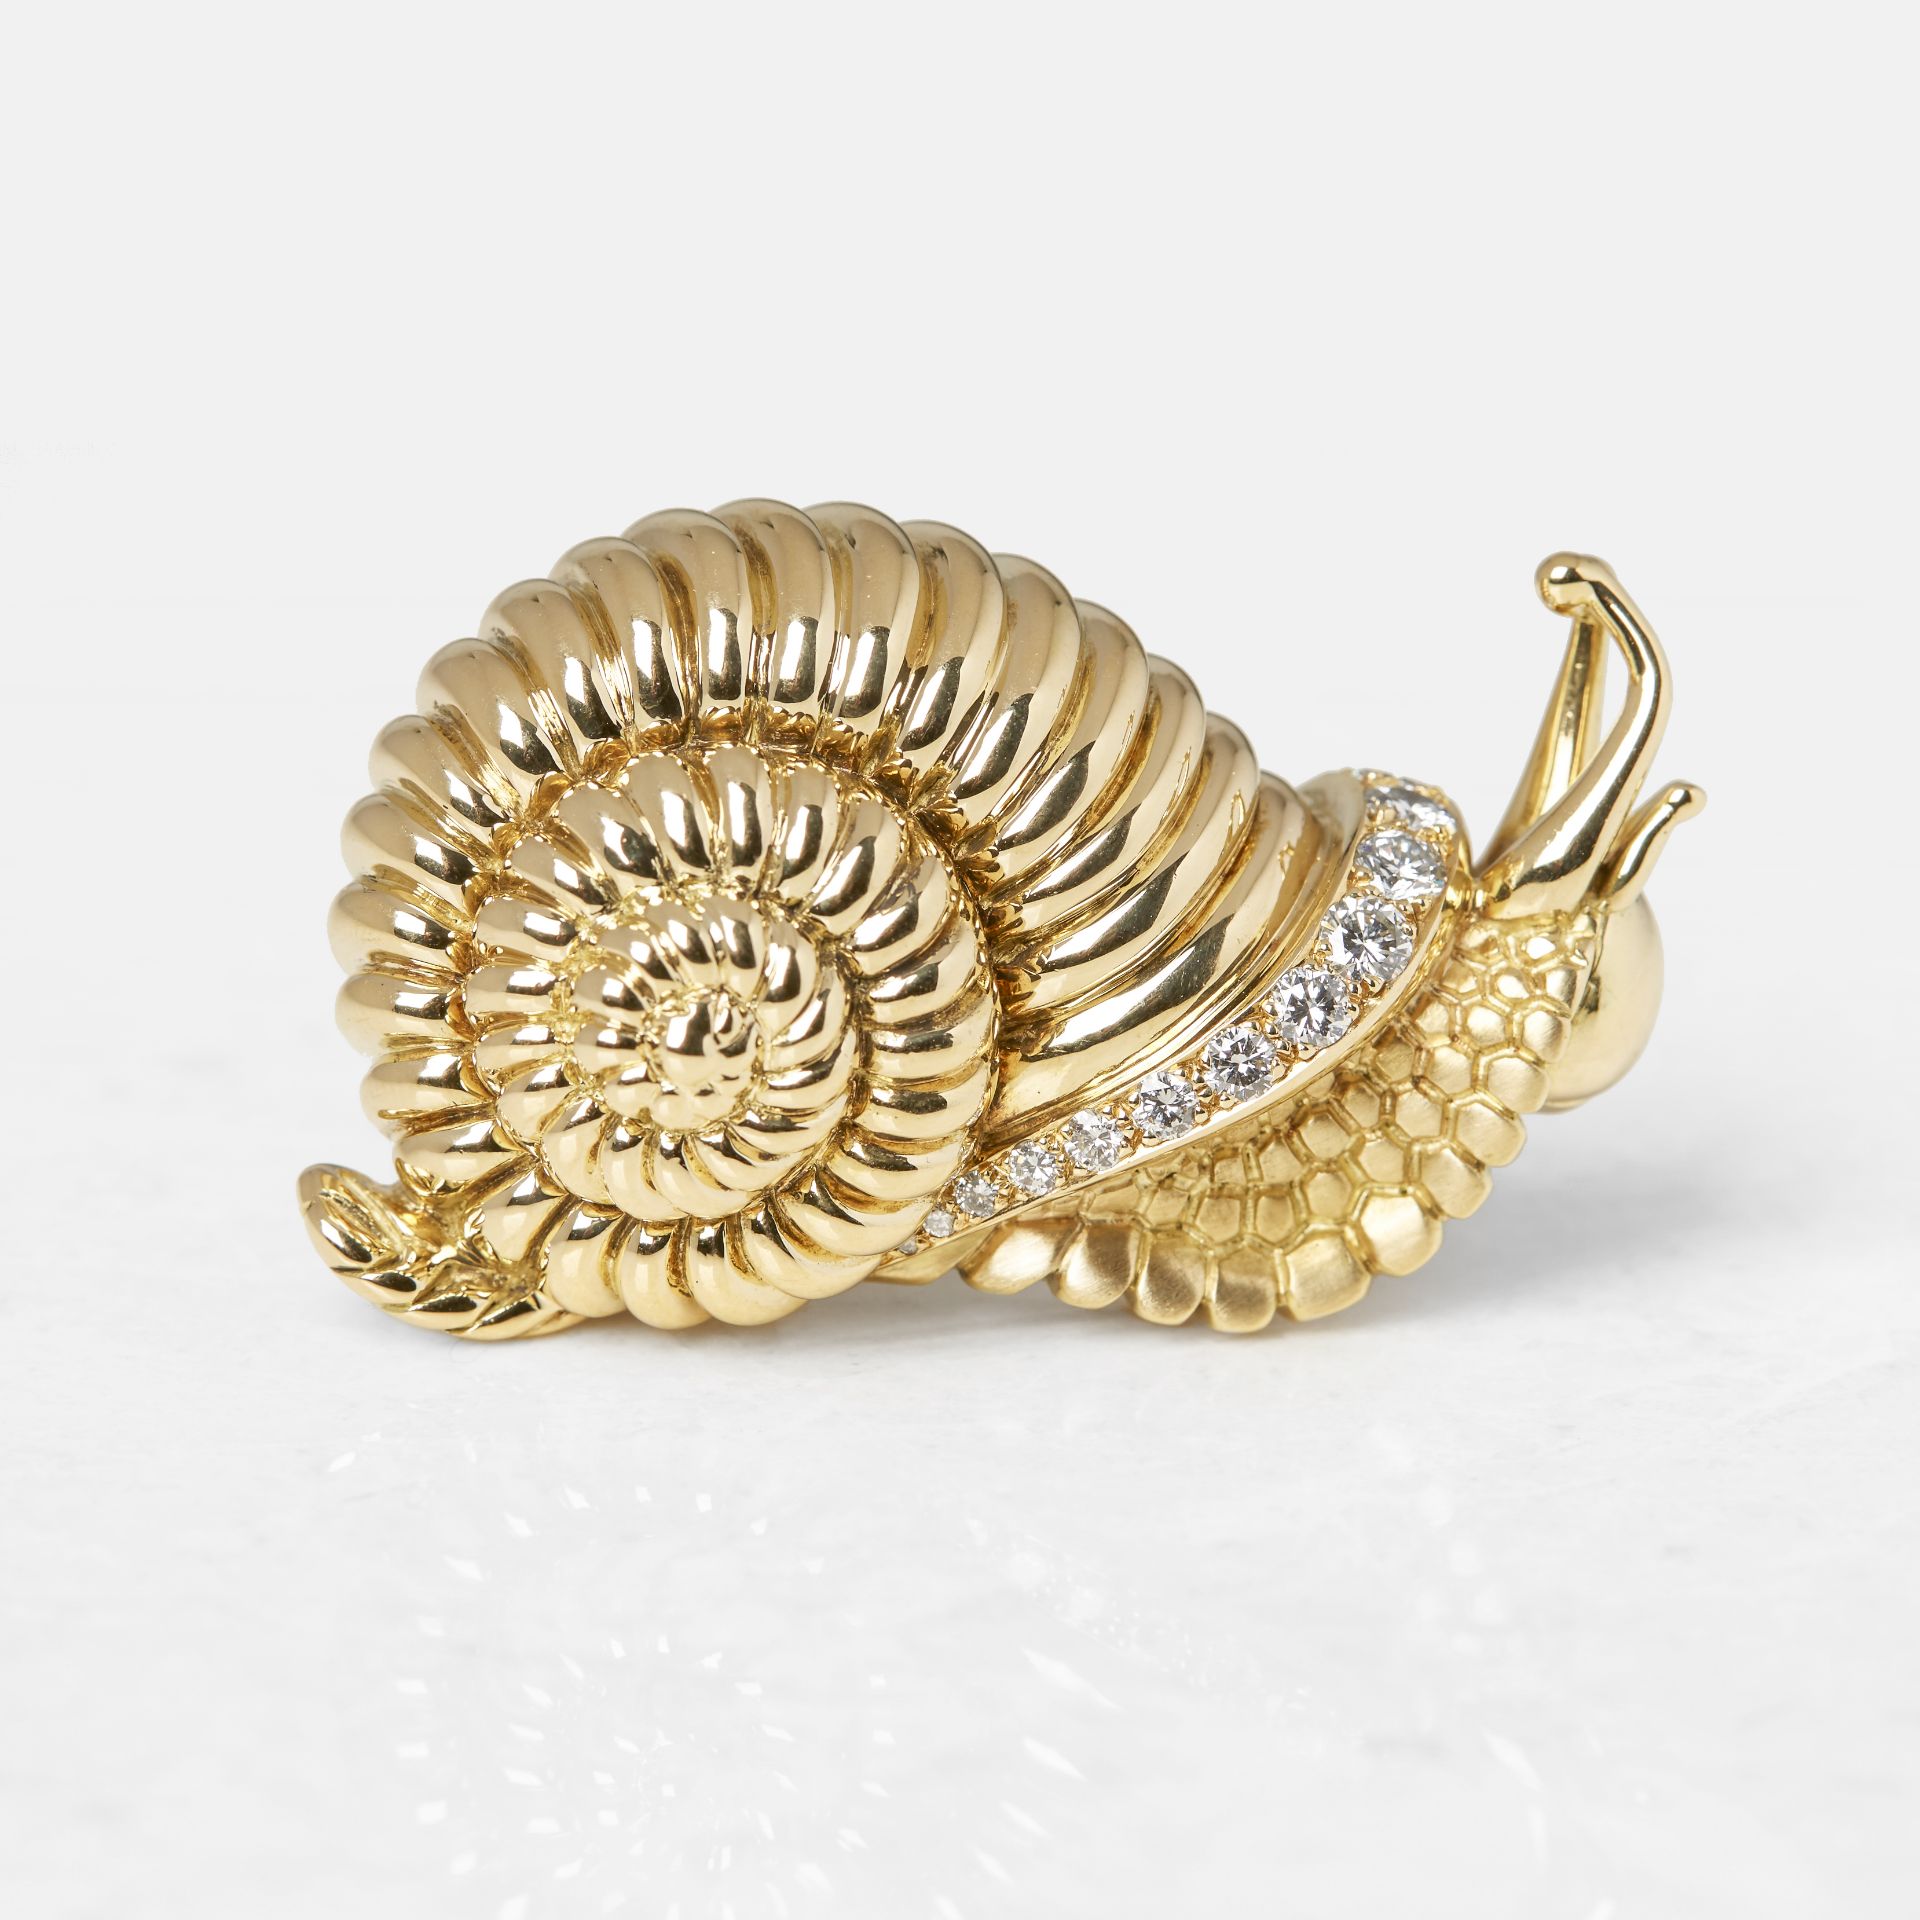 Rene Boivin 18k Yellow Gold Diamond Snail Brooch with Presentation Box - Image 2 of 19